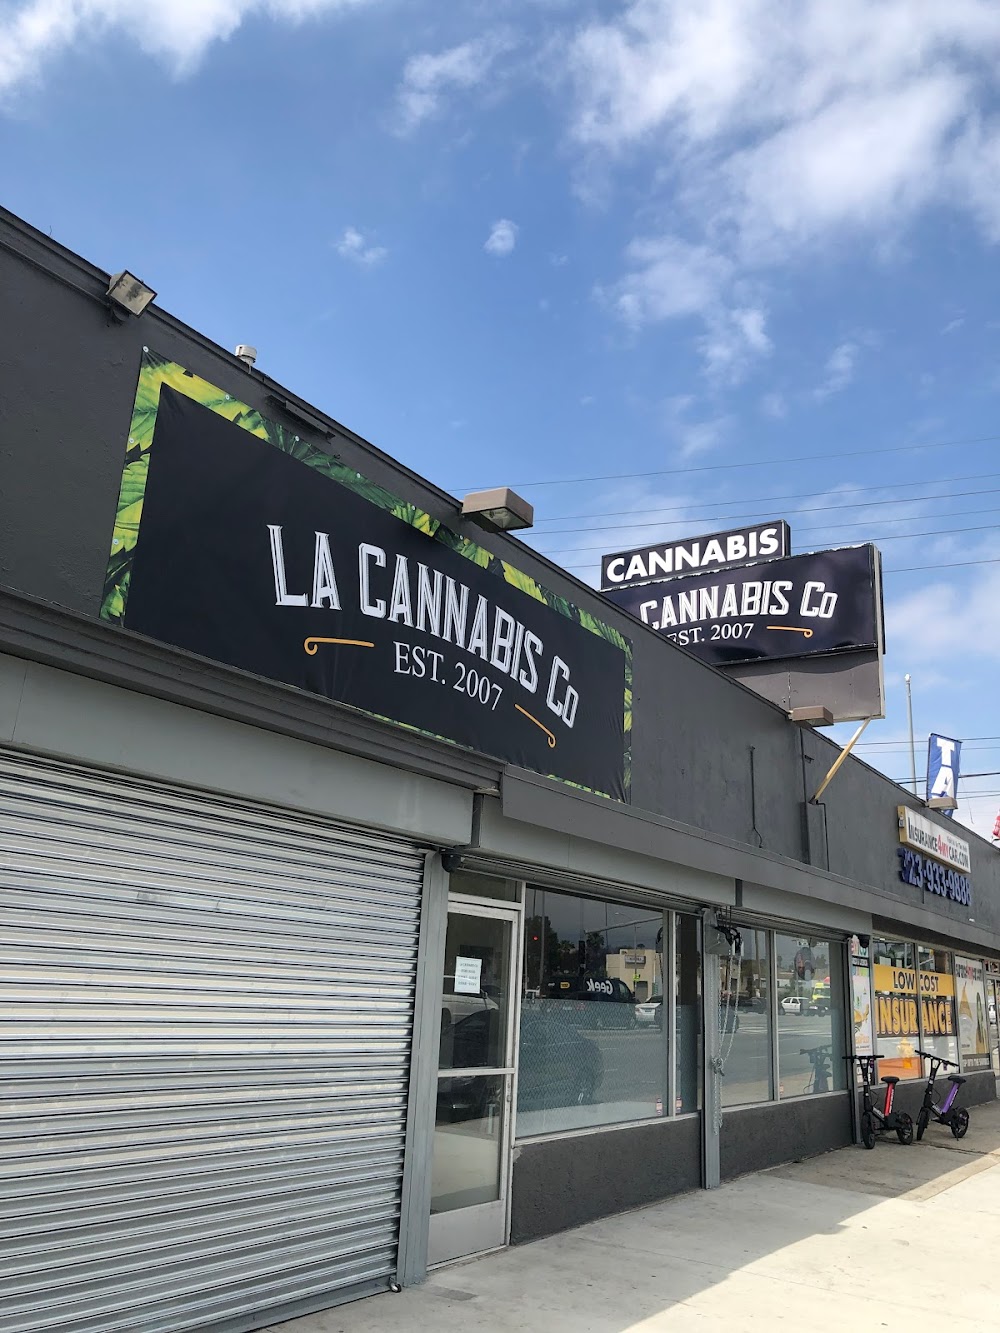 LA Cannabis Co